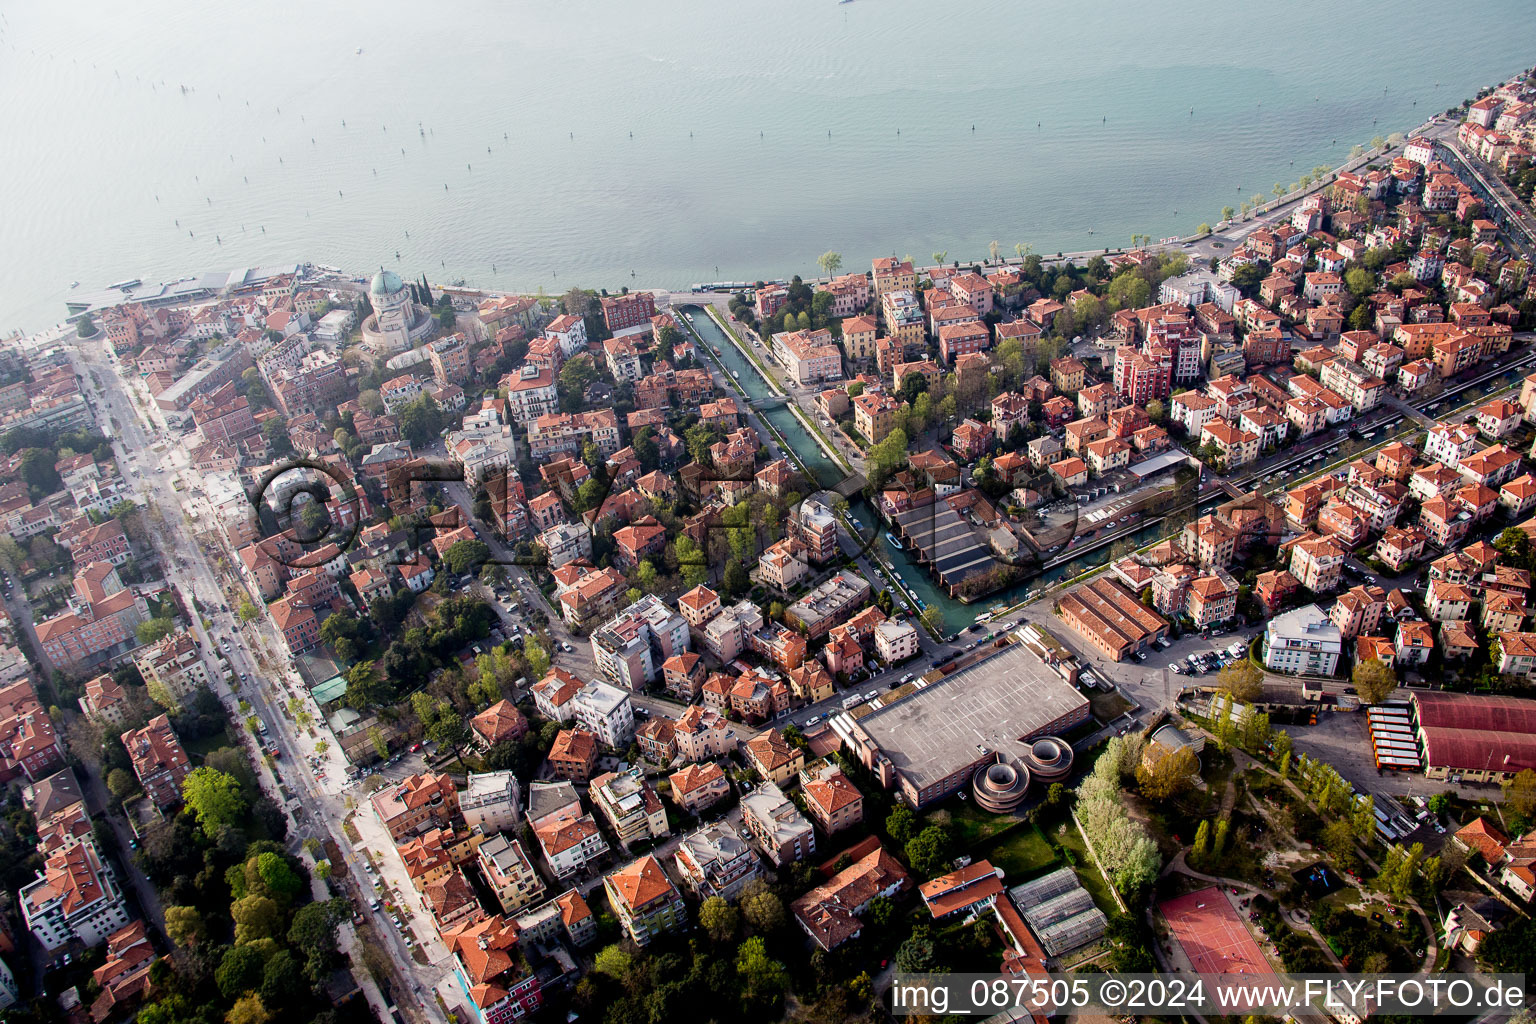 Aerial photograpy of Venezia in the state Veneto, Italy